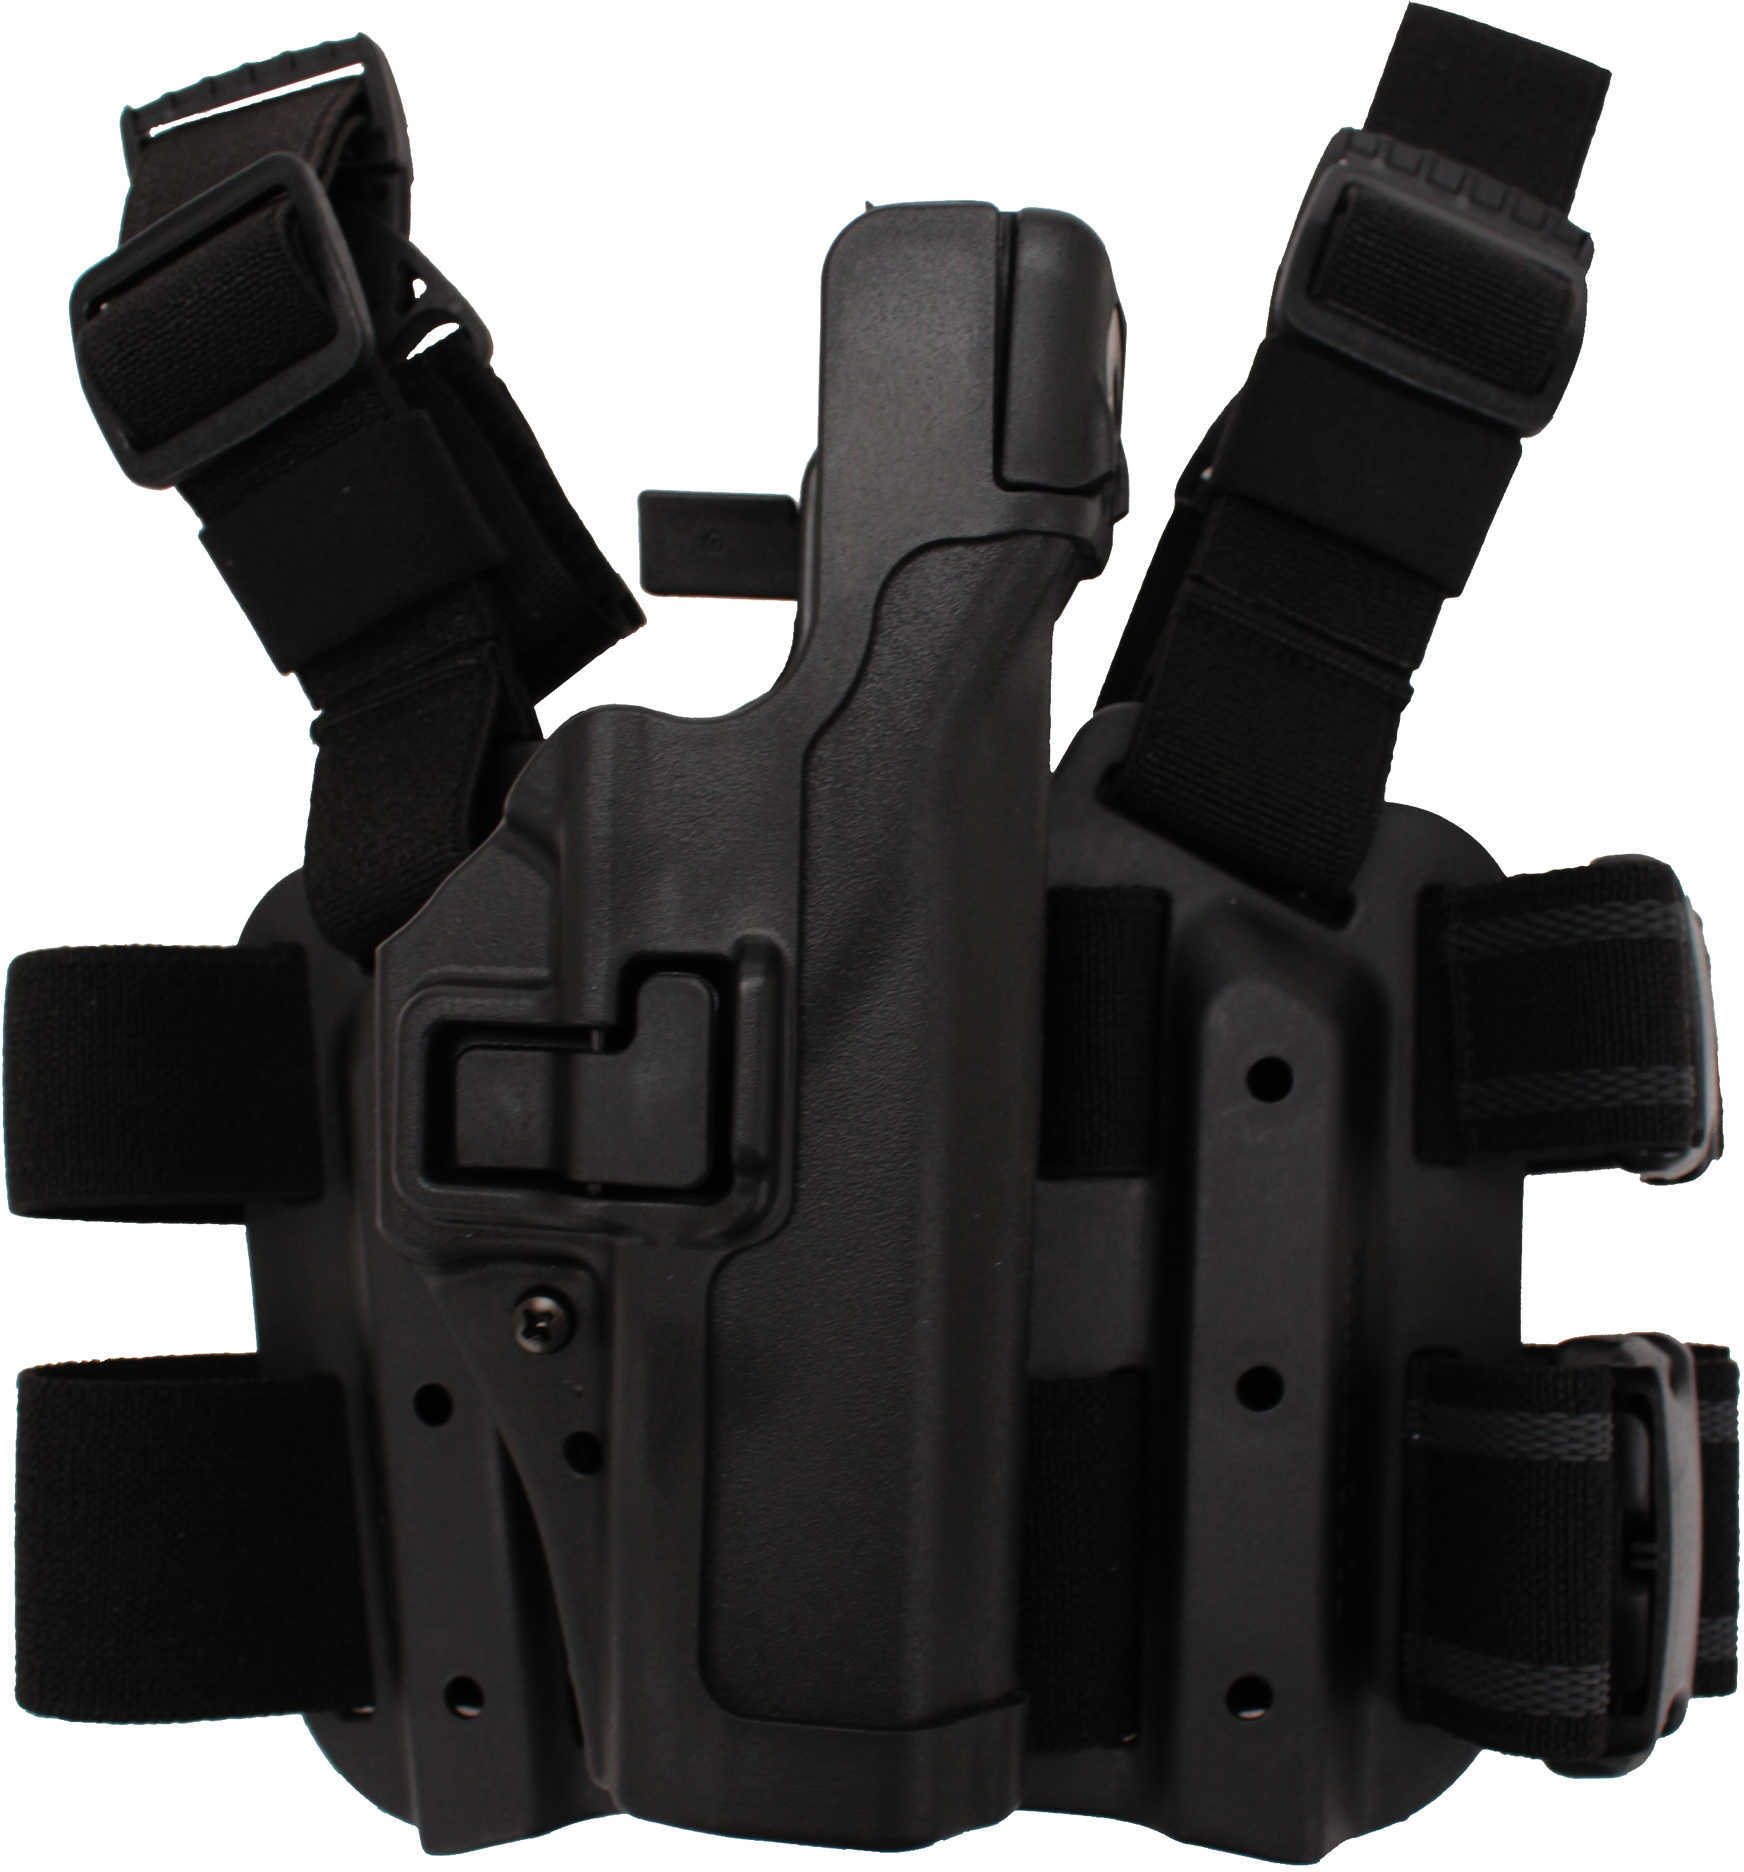 BLACKHAWK Level 3 Tactical SERPA Holster Fits Glock 17/19/22/23/31/32 Right Hand 430600BK-R